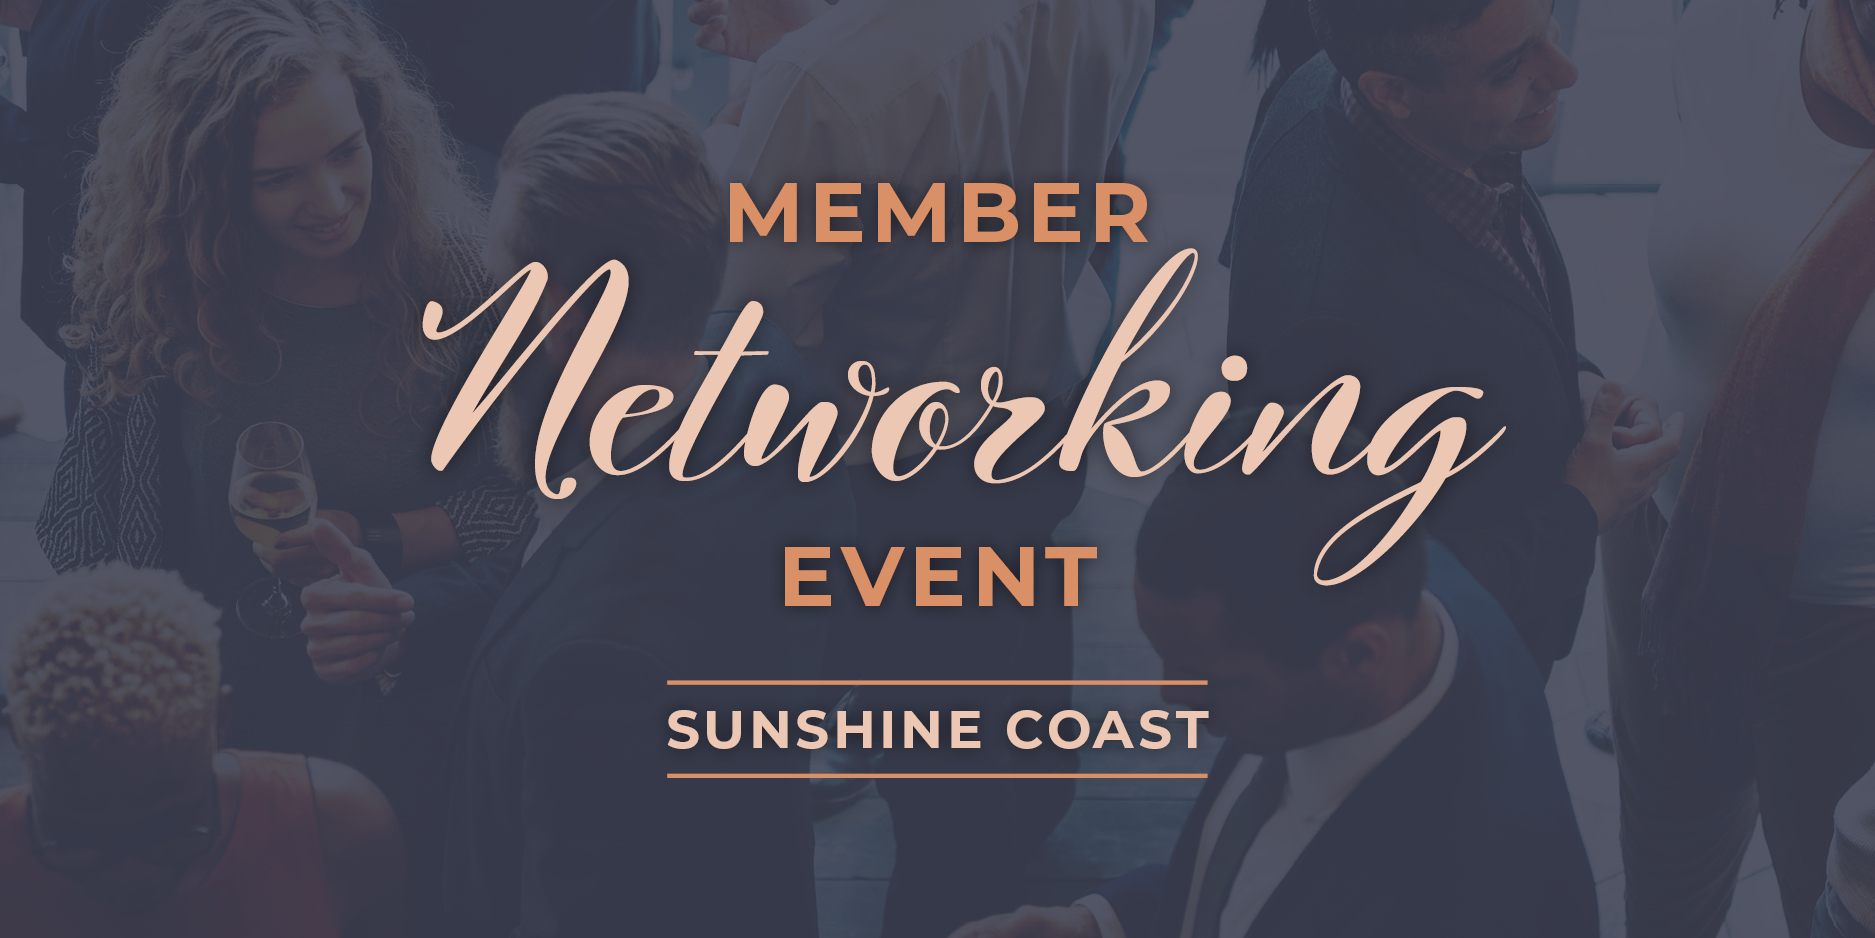 Member networking event - Sunshine Coast